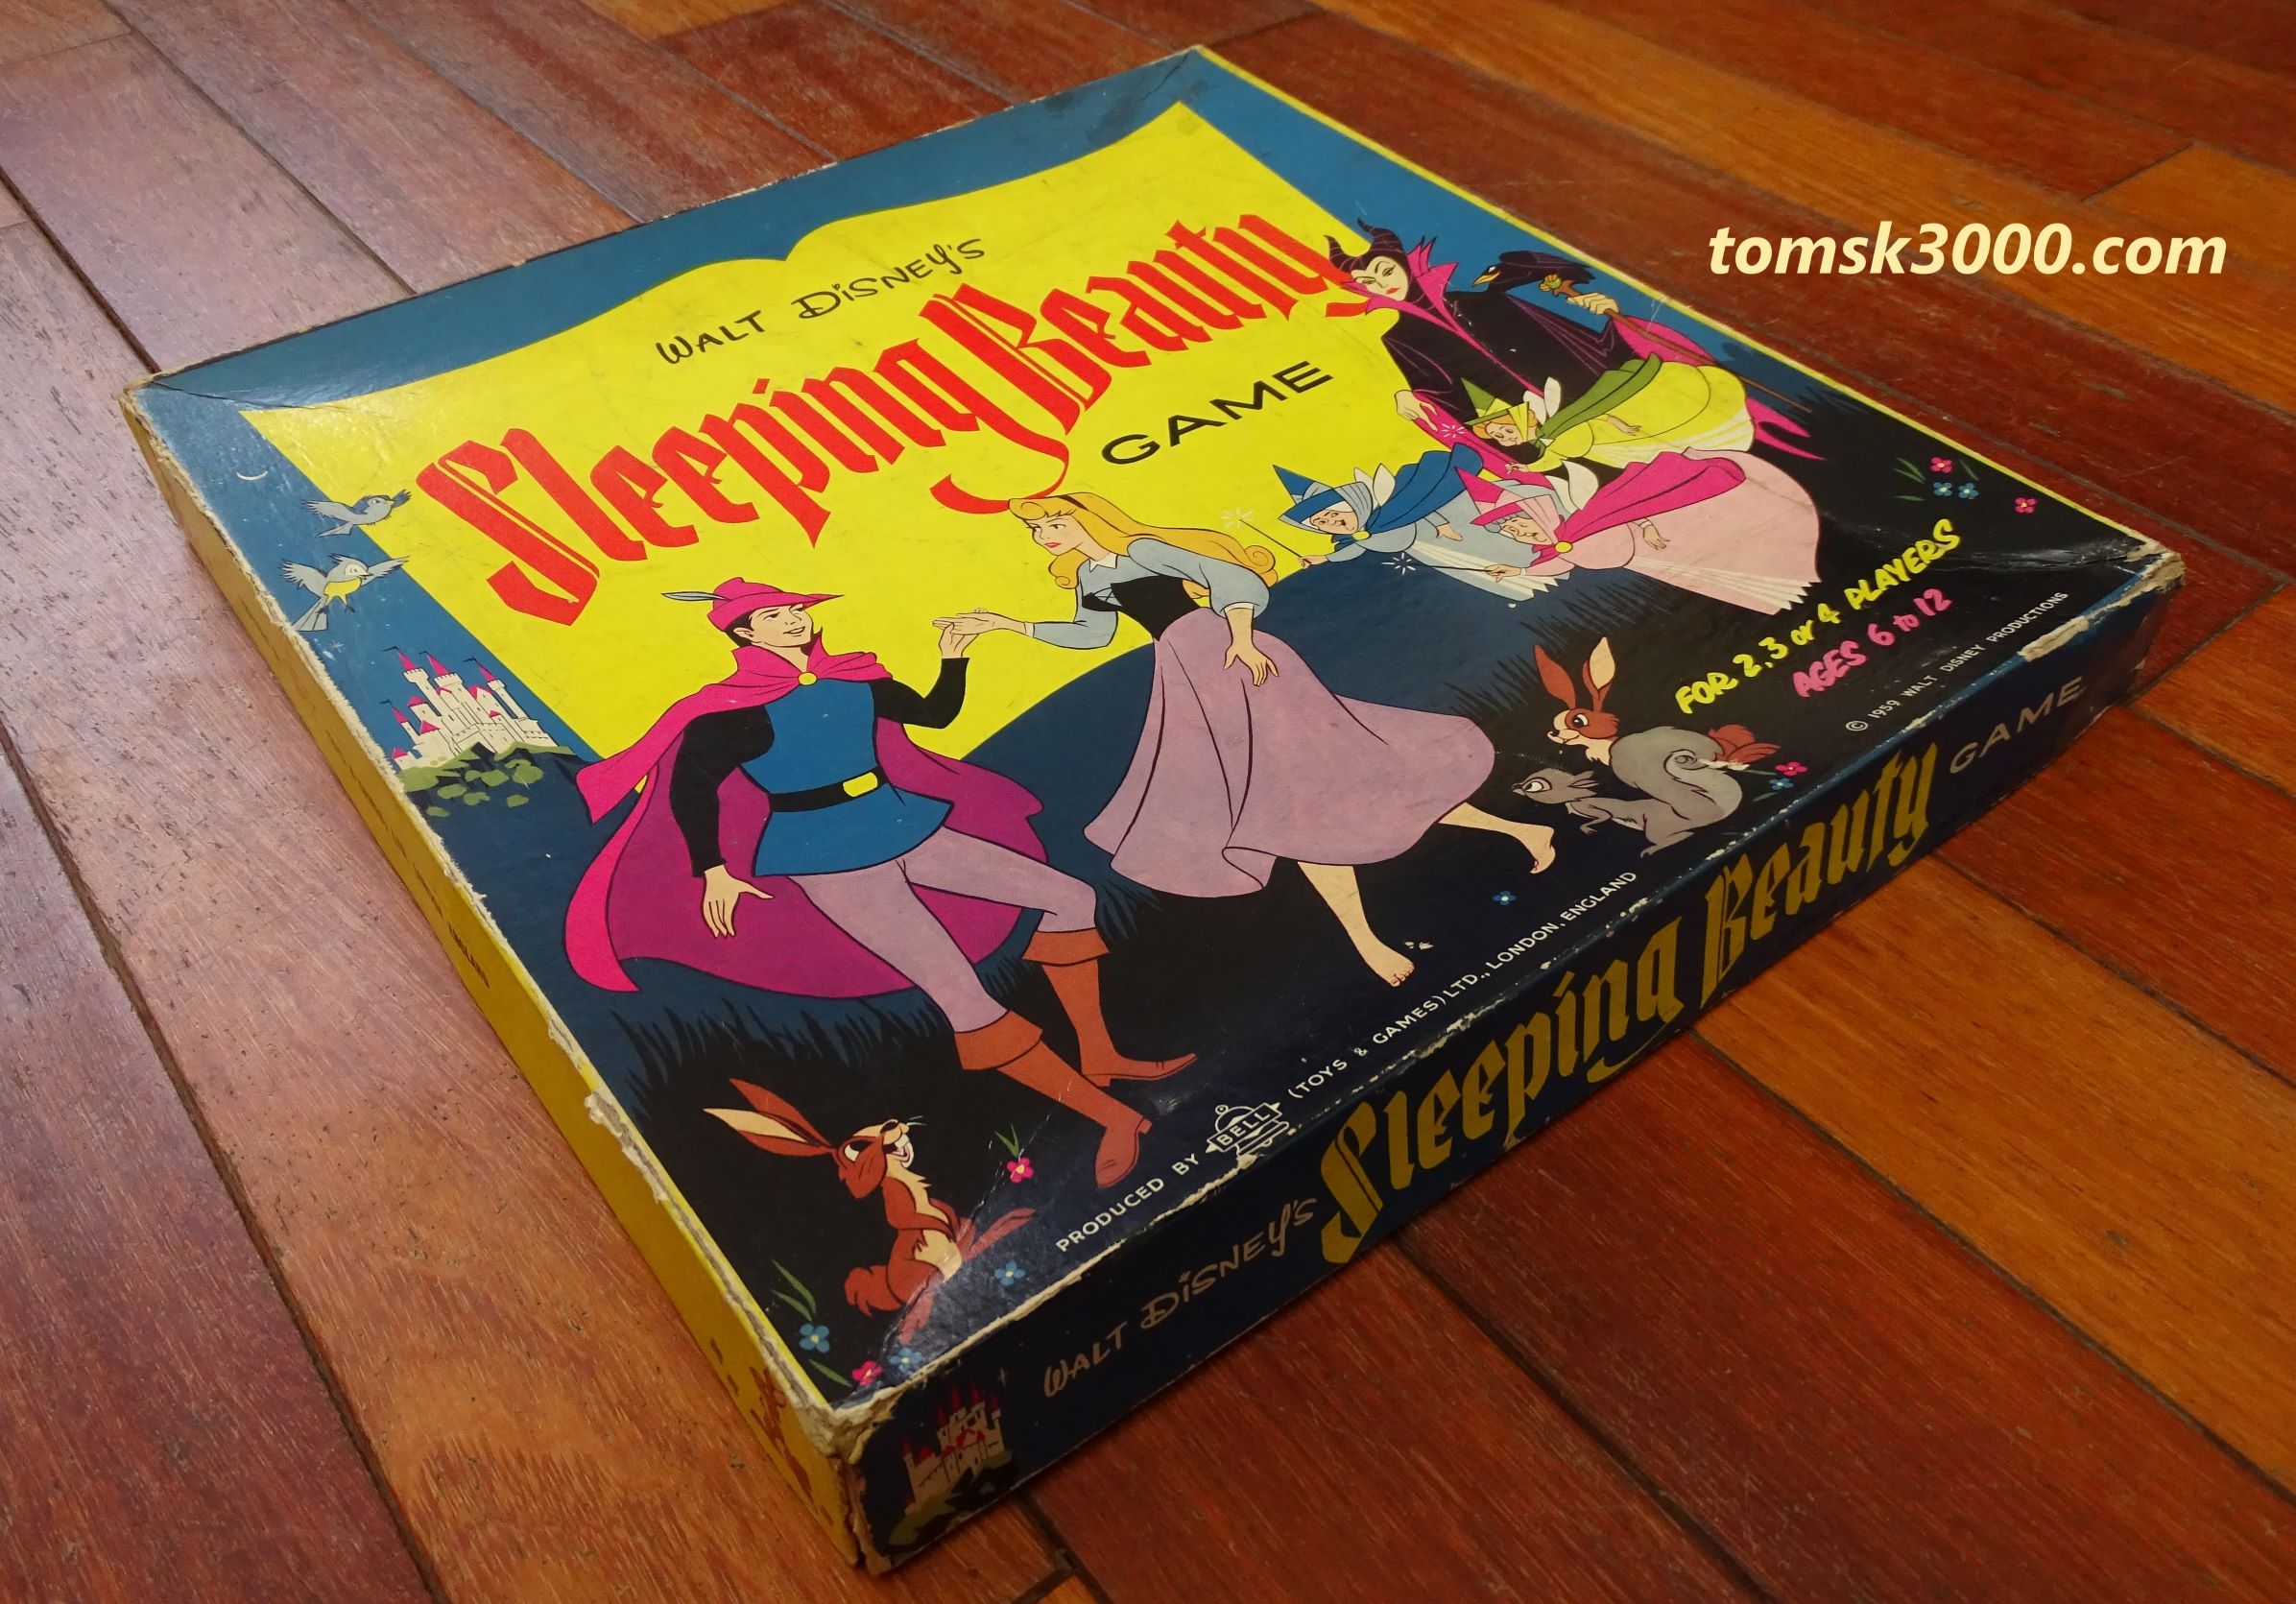 1959 Walt Disneys Sleeping Beauty Game By Bell Ltd London England Tomsk3000